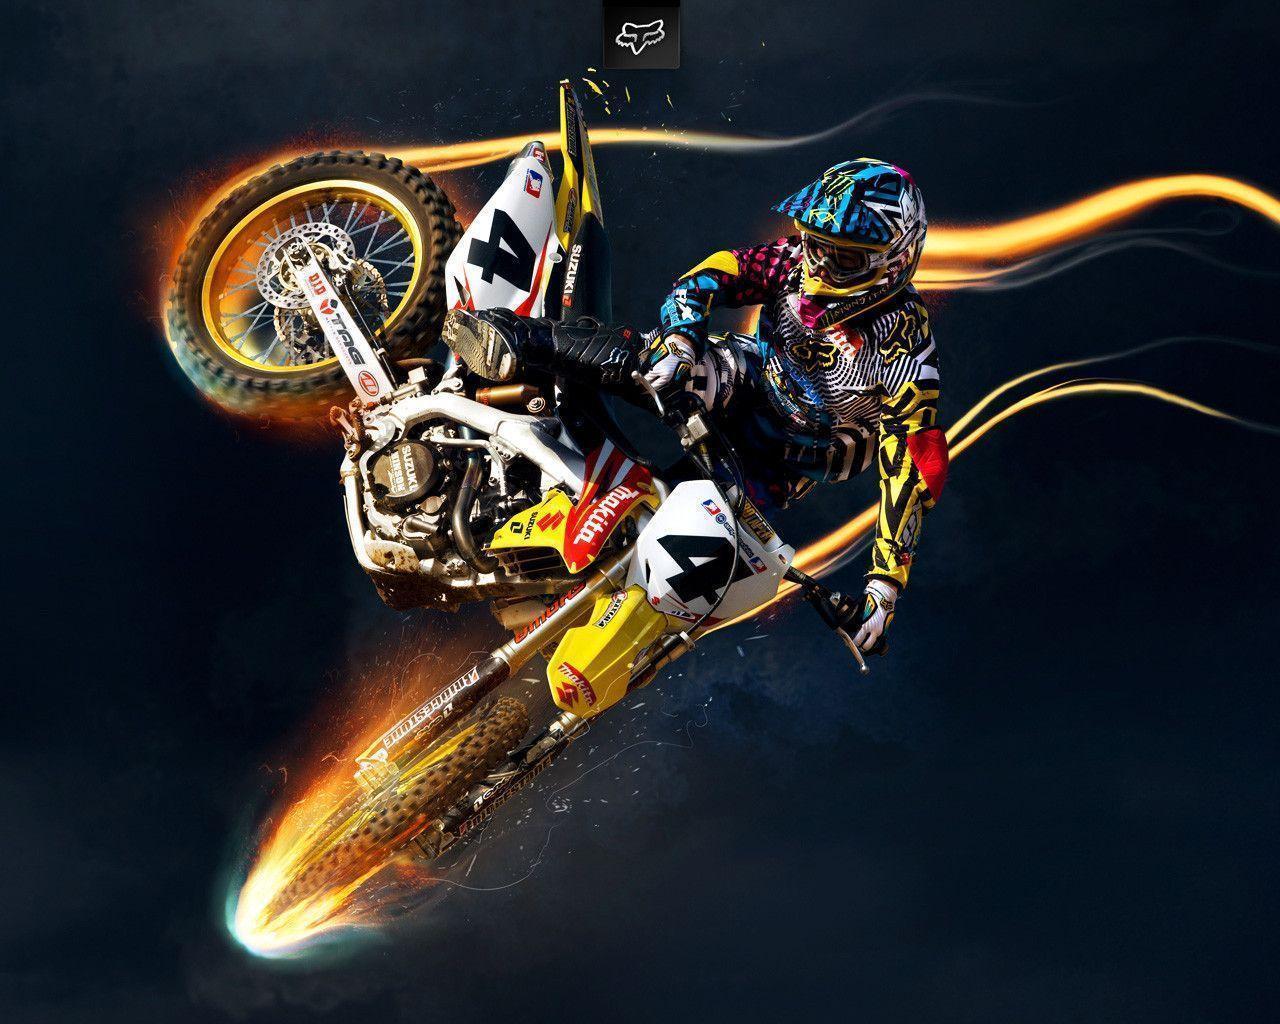 Amazing Motocross Wallpaper 23186 High Resolution. wallpicnet